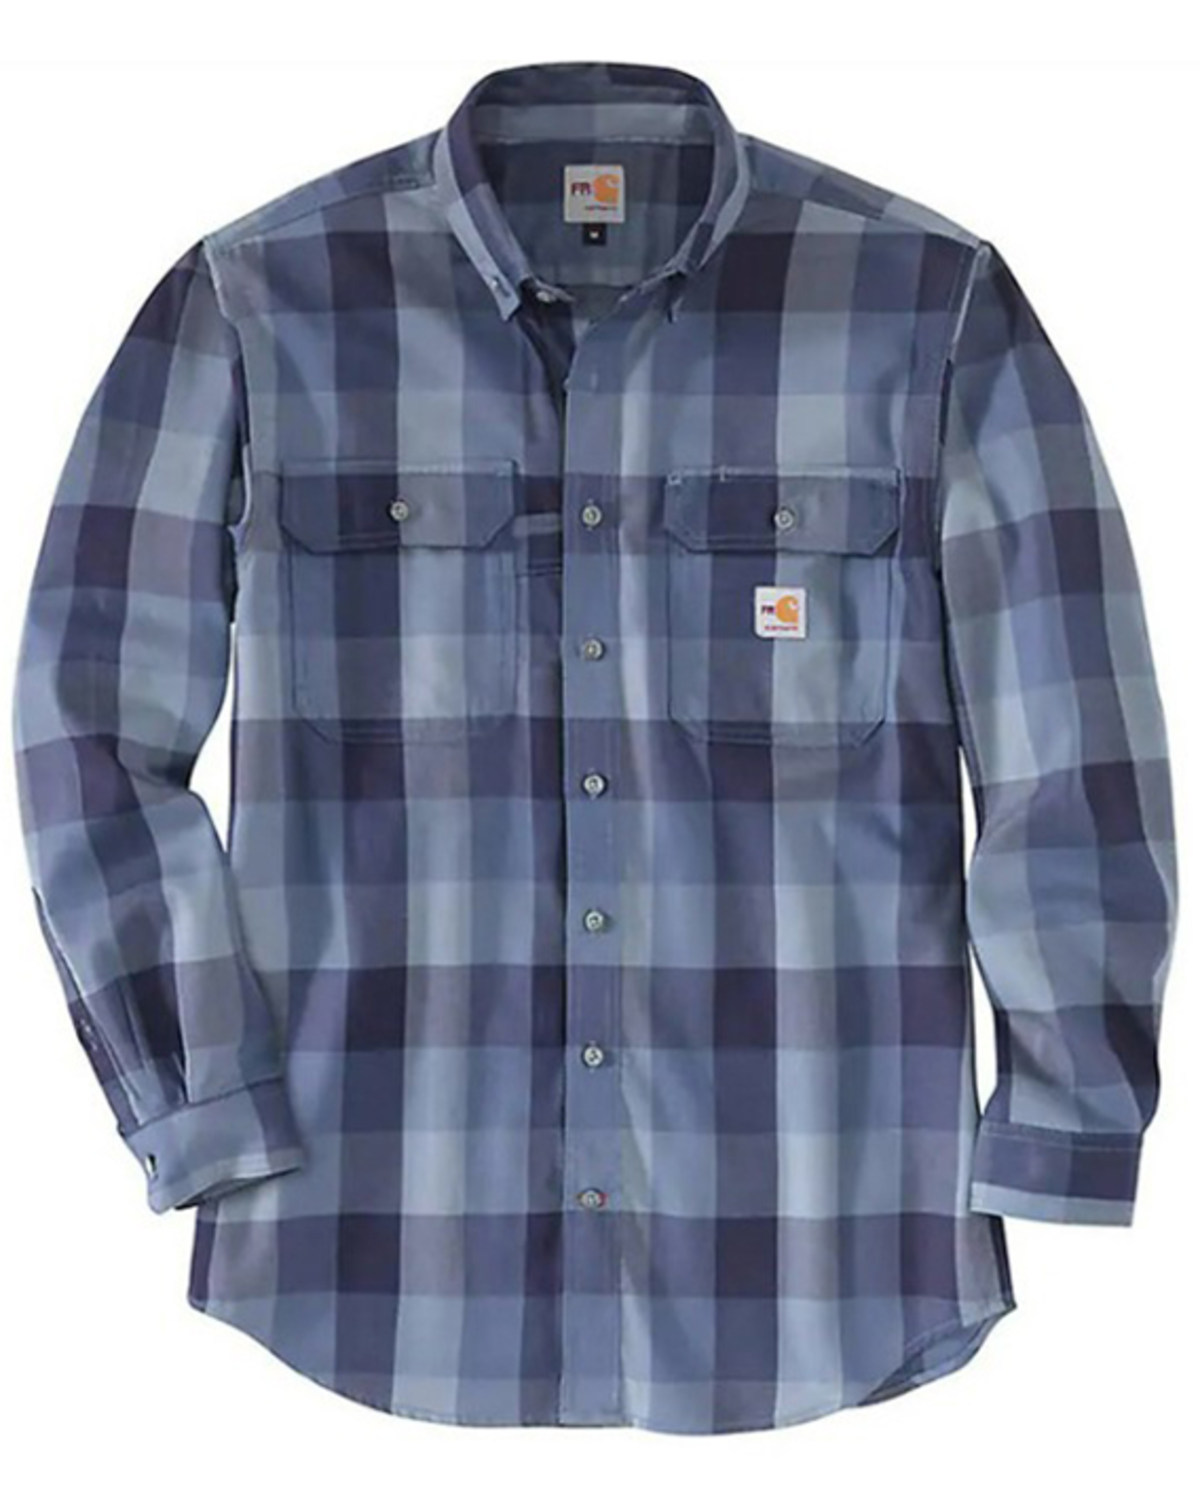 Carhartt Men's FR Twill Plaid Print Long Sleeve Button Down Work Shirt